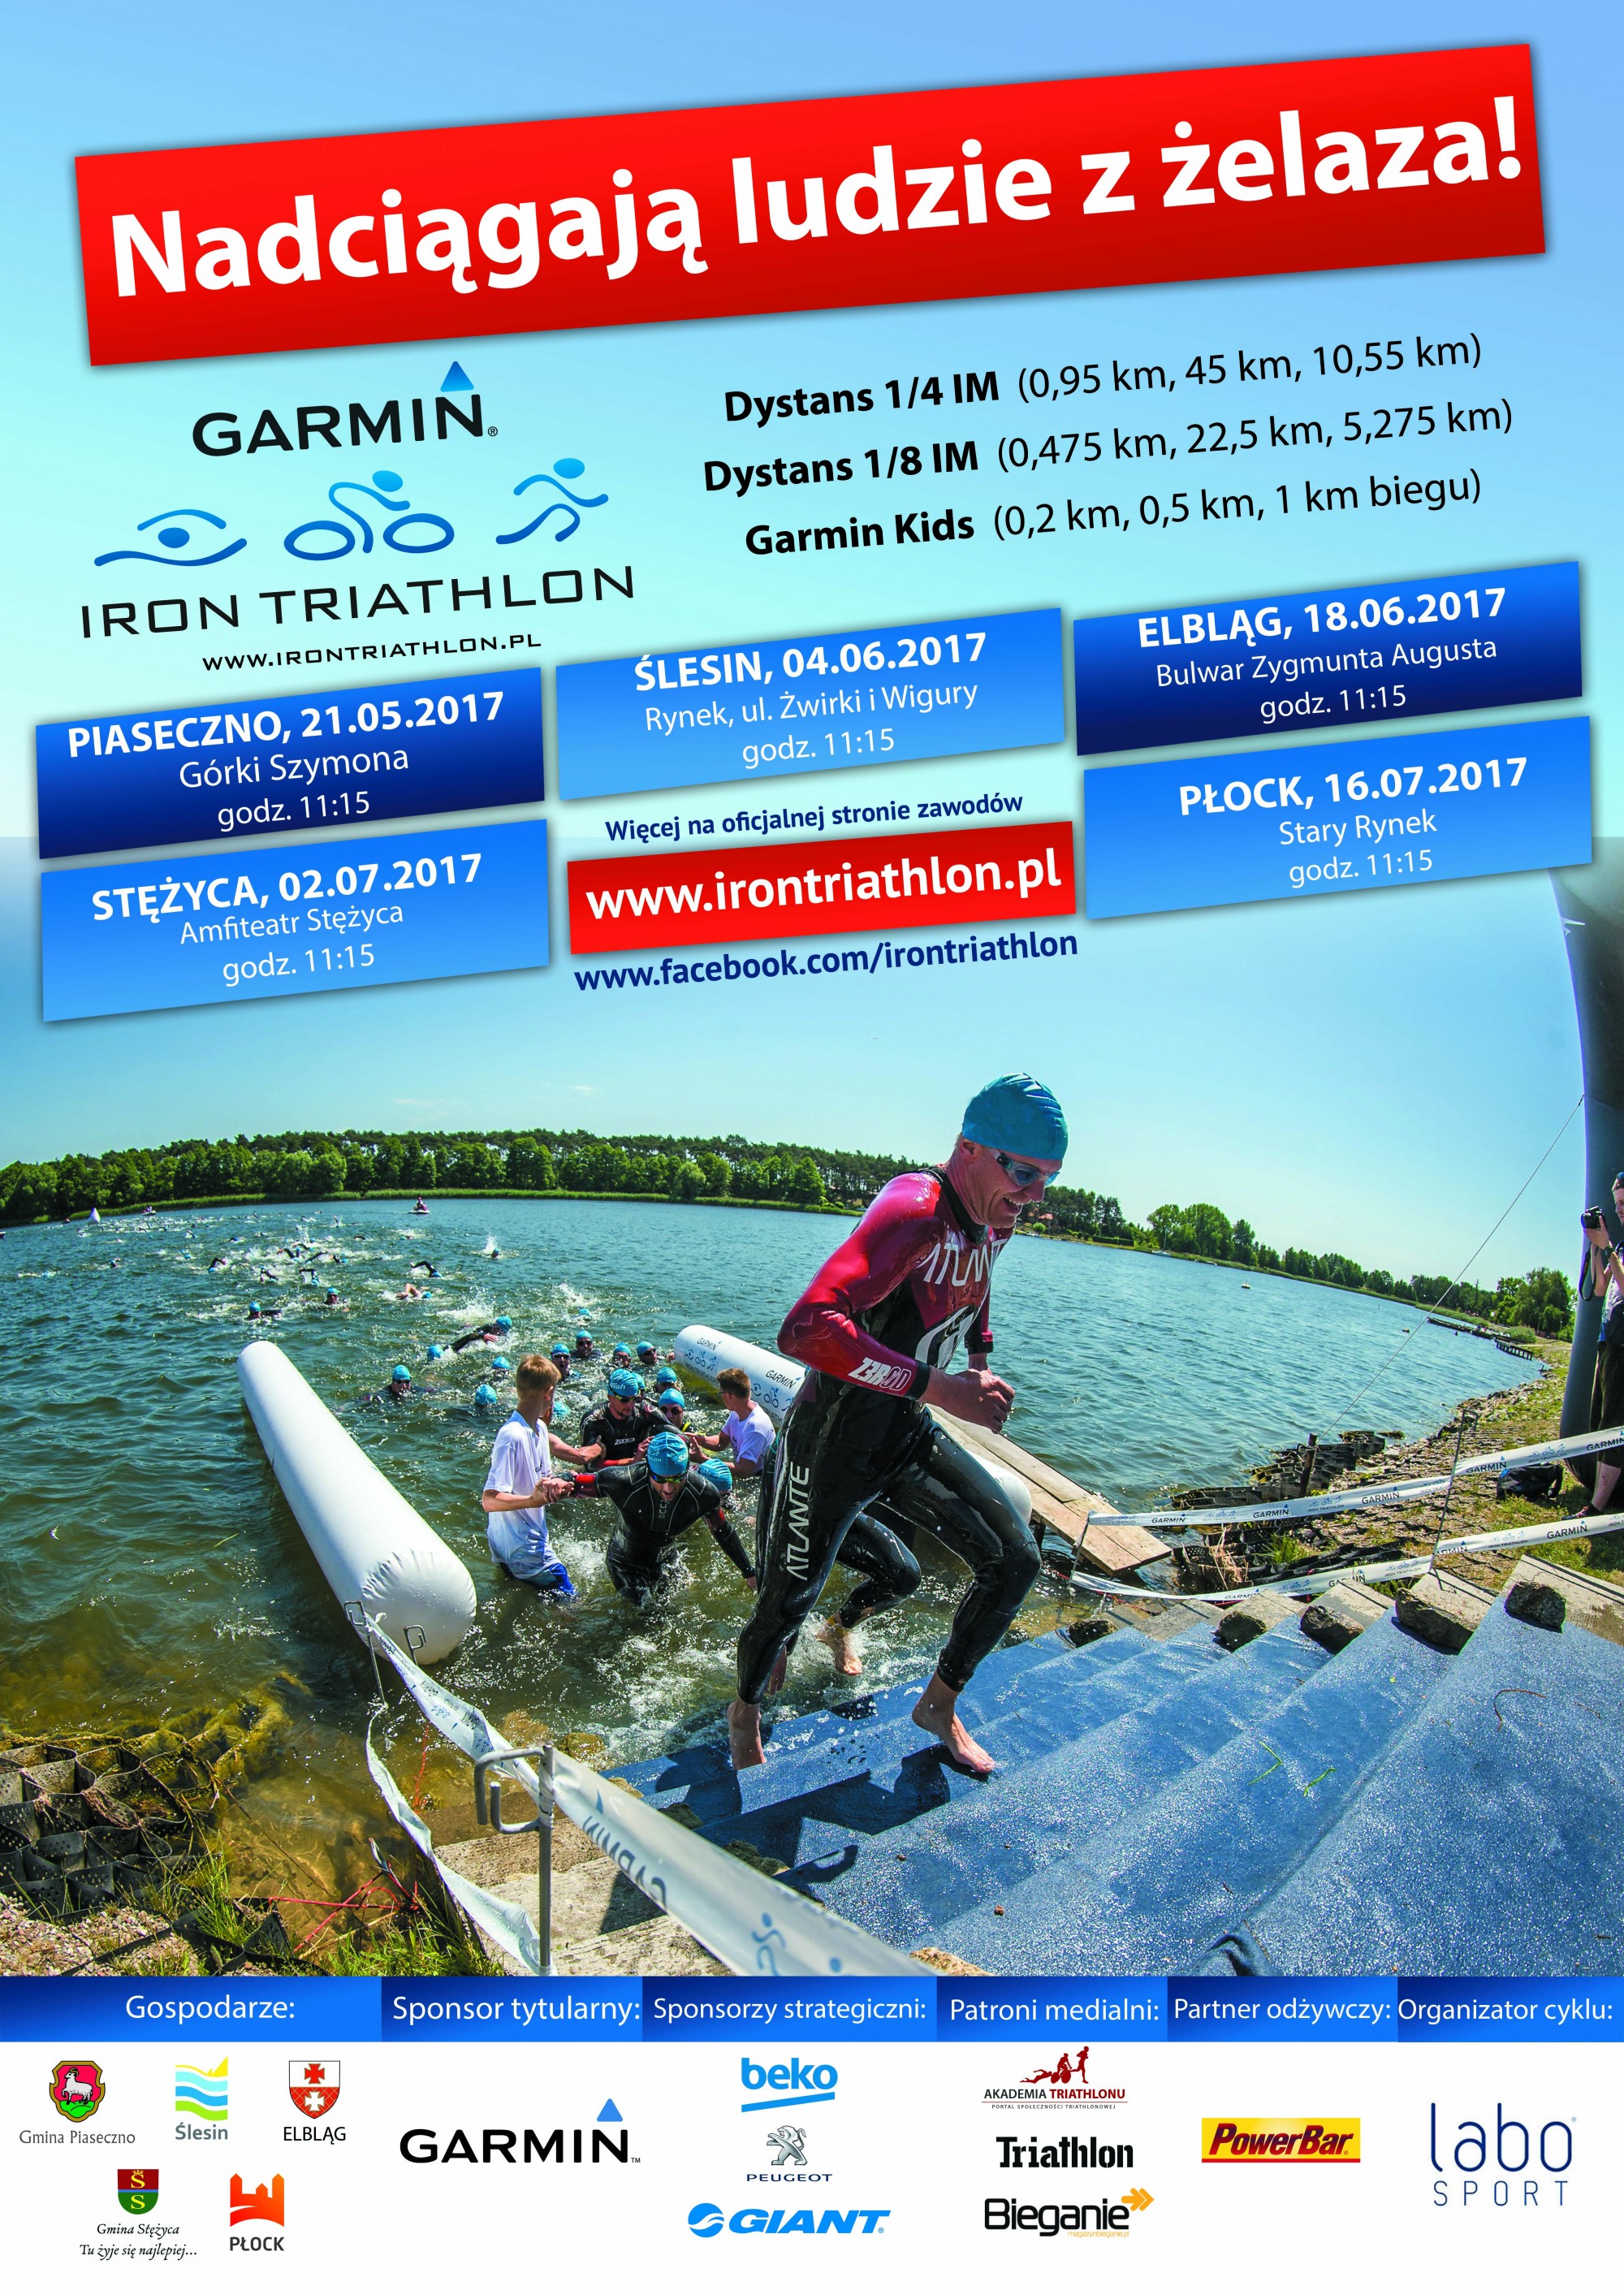 Garmin Iron Triathlon 2017 - Amfiteatr Stężyca - 2 lipca 2017 godz. 11.15